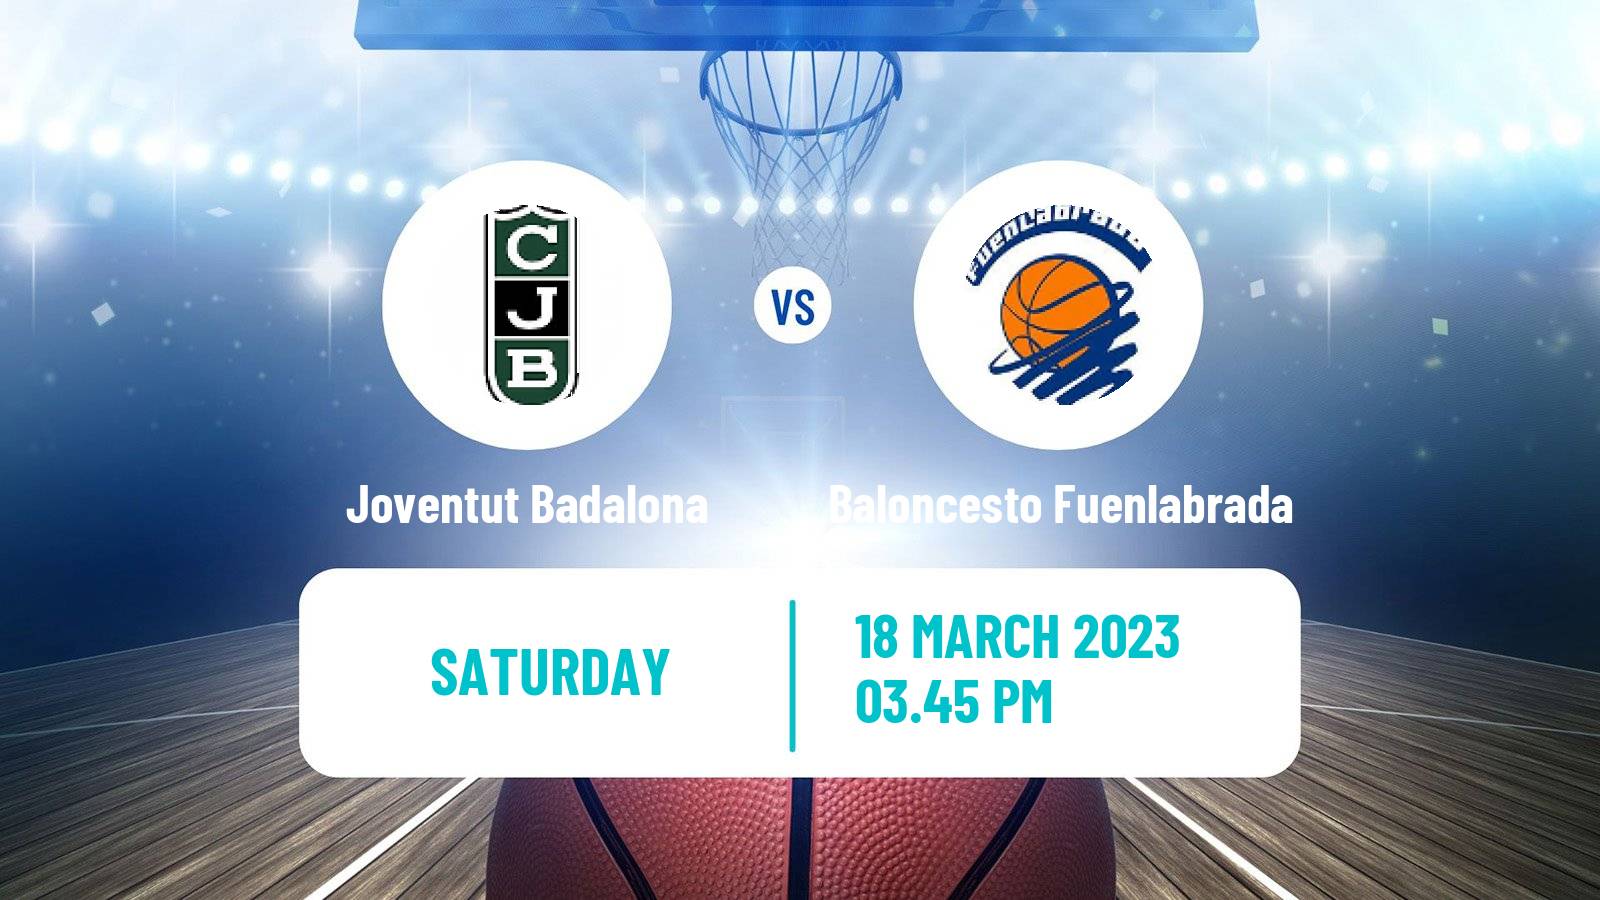 Basketball Spanish ACB League Joventut Badalona - Baloncesto Fuenlabrada